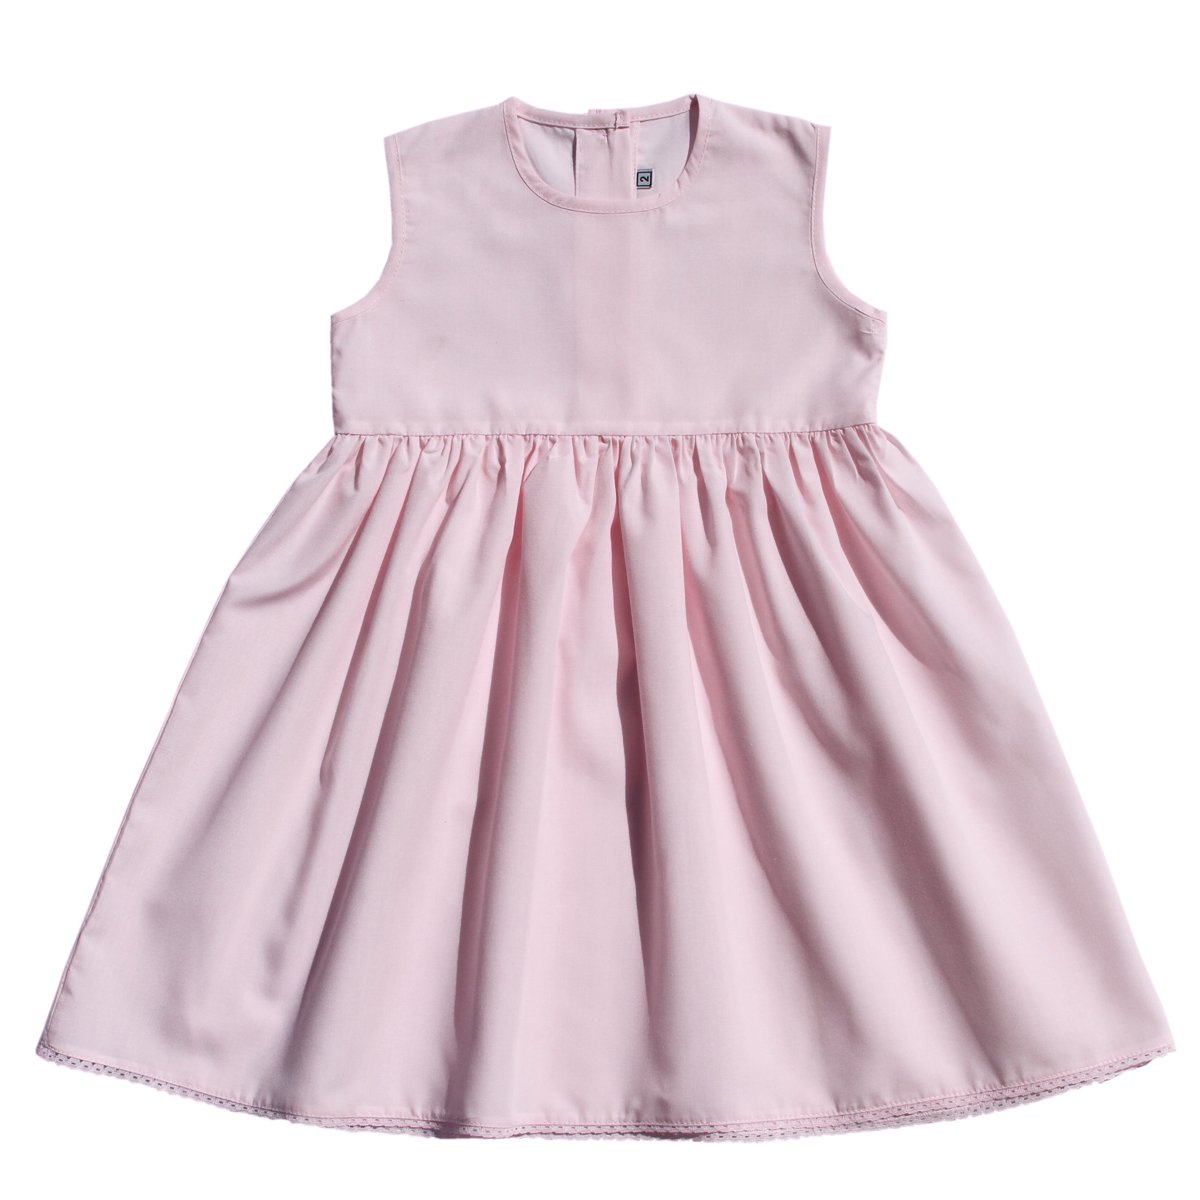 Carouselwear Baby Toddler Girls Pink Under Slip Petticoat